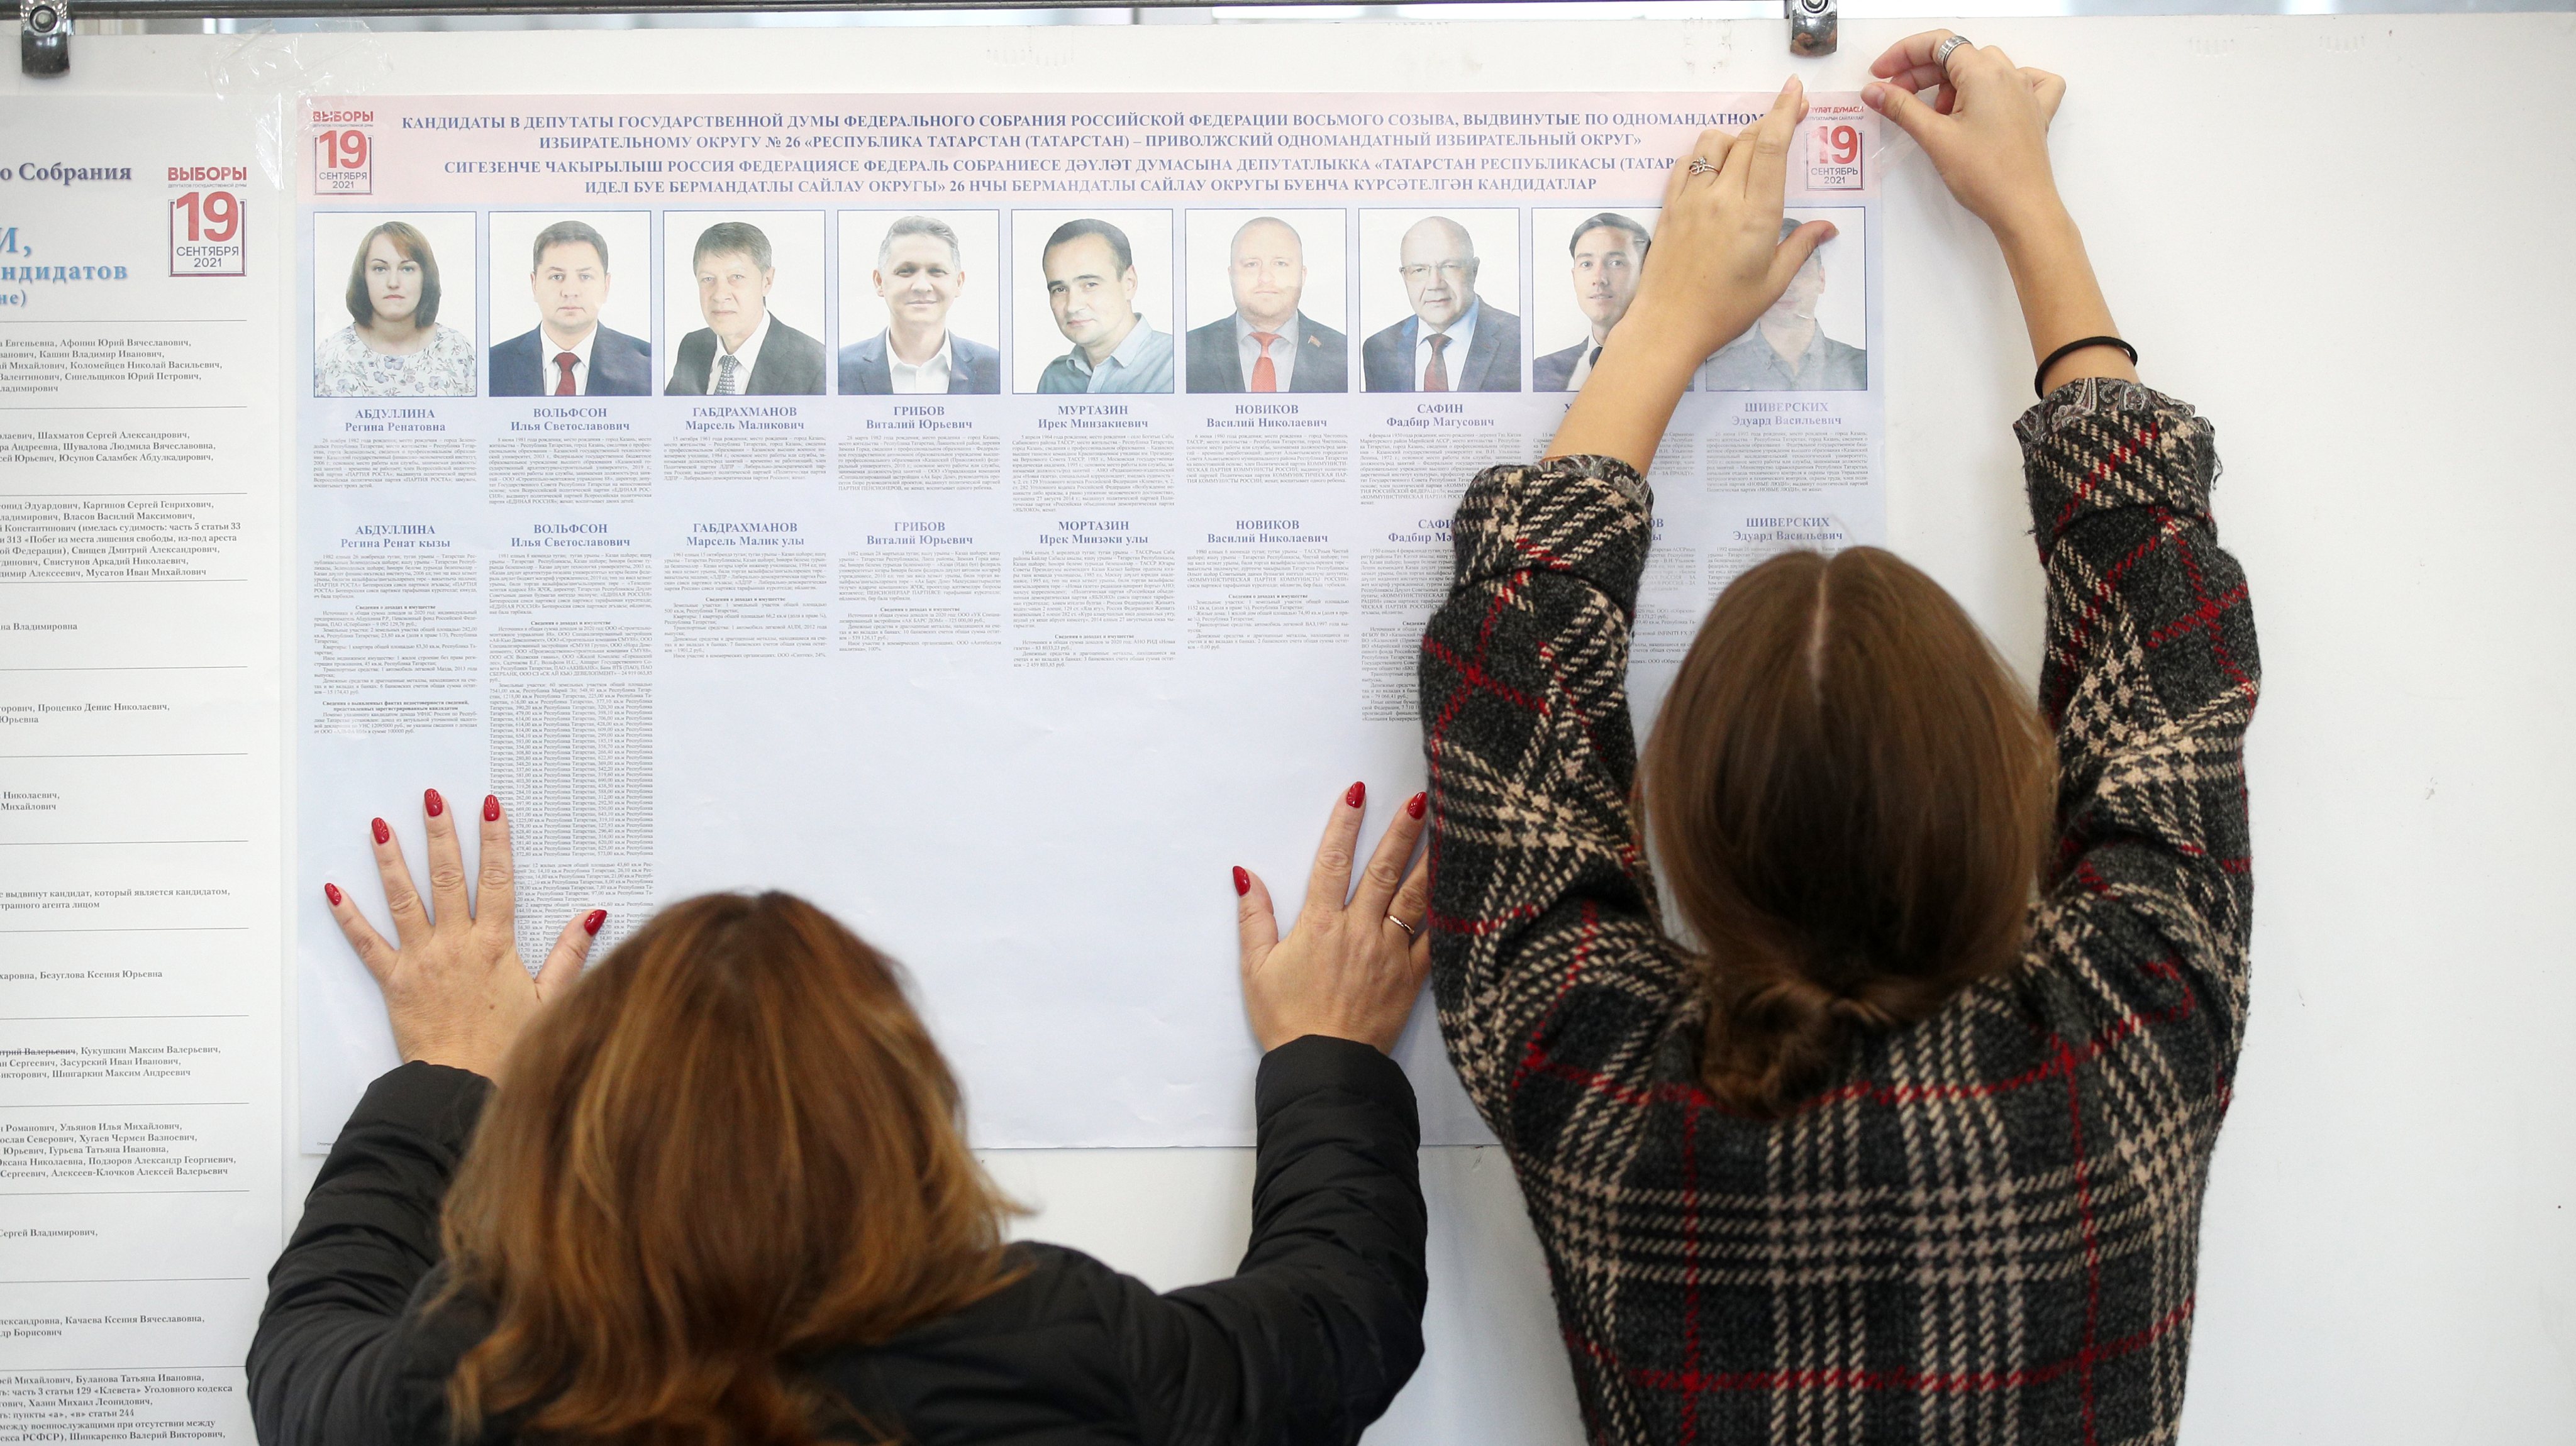 Polling stations ahead of 2021 Russian legislative election in Kazan